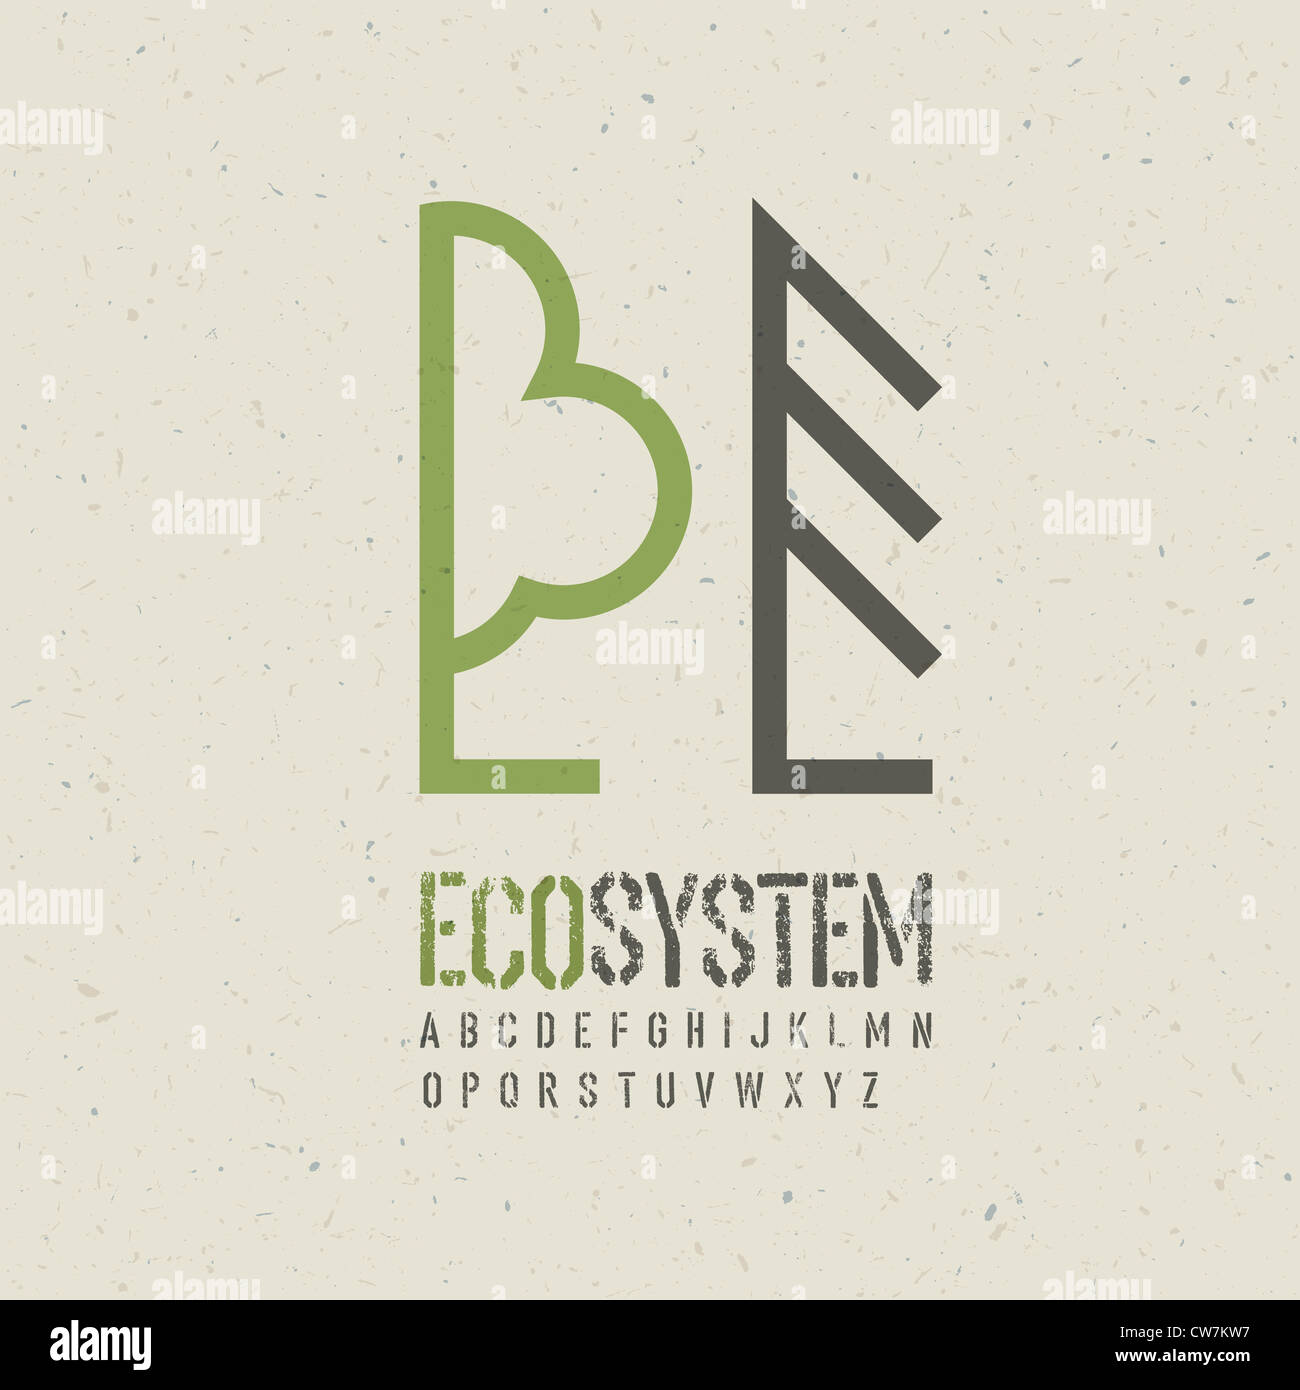 Ecological emblem template Stock Photo